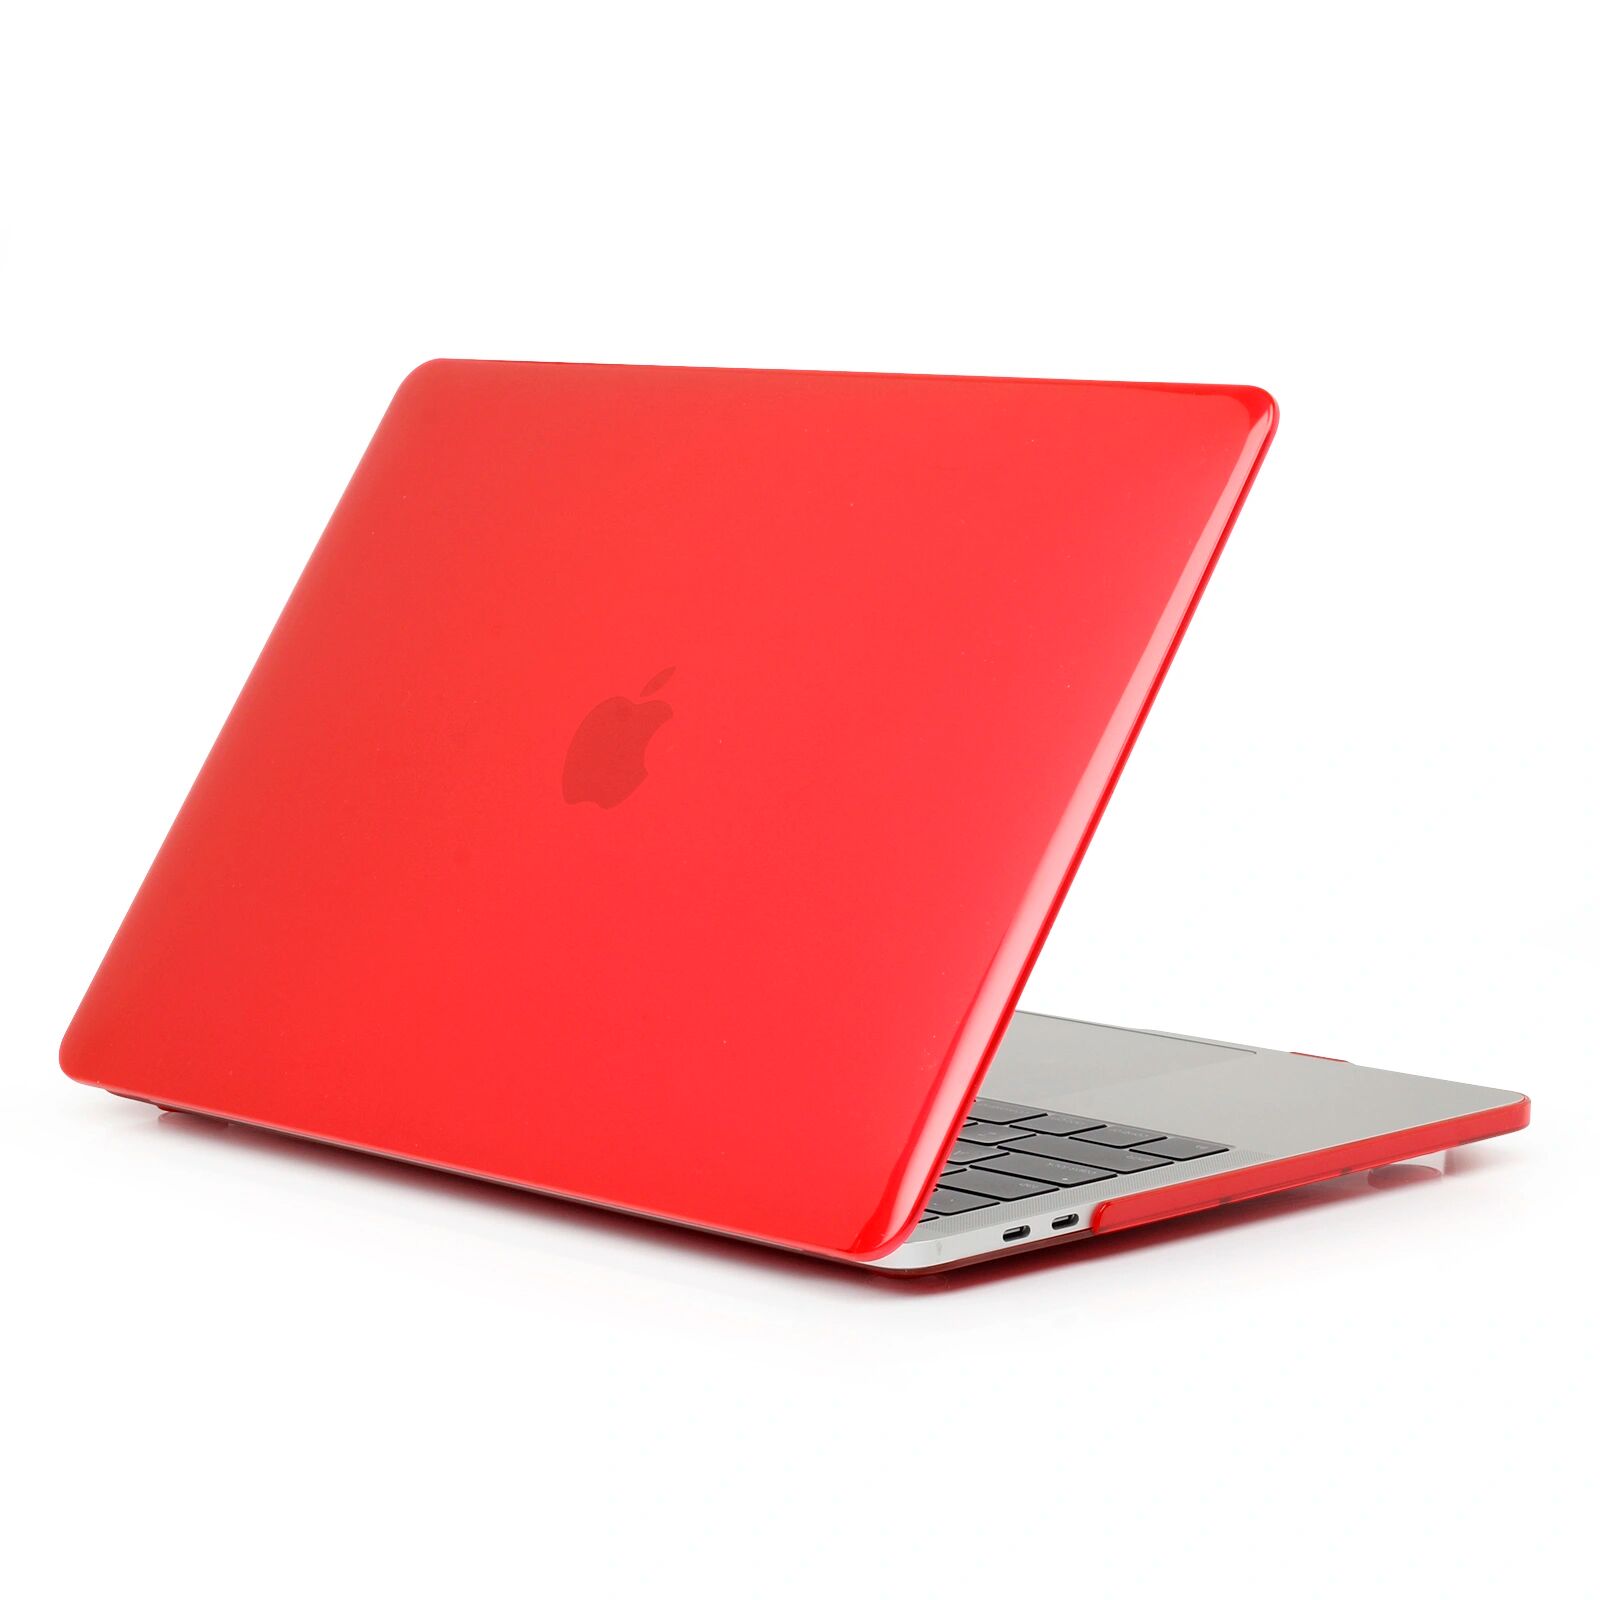 iPouzdro.cz Ochranný kryt na MacBook Pro 13 (2012-2015) - Crystal Red